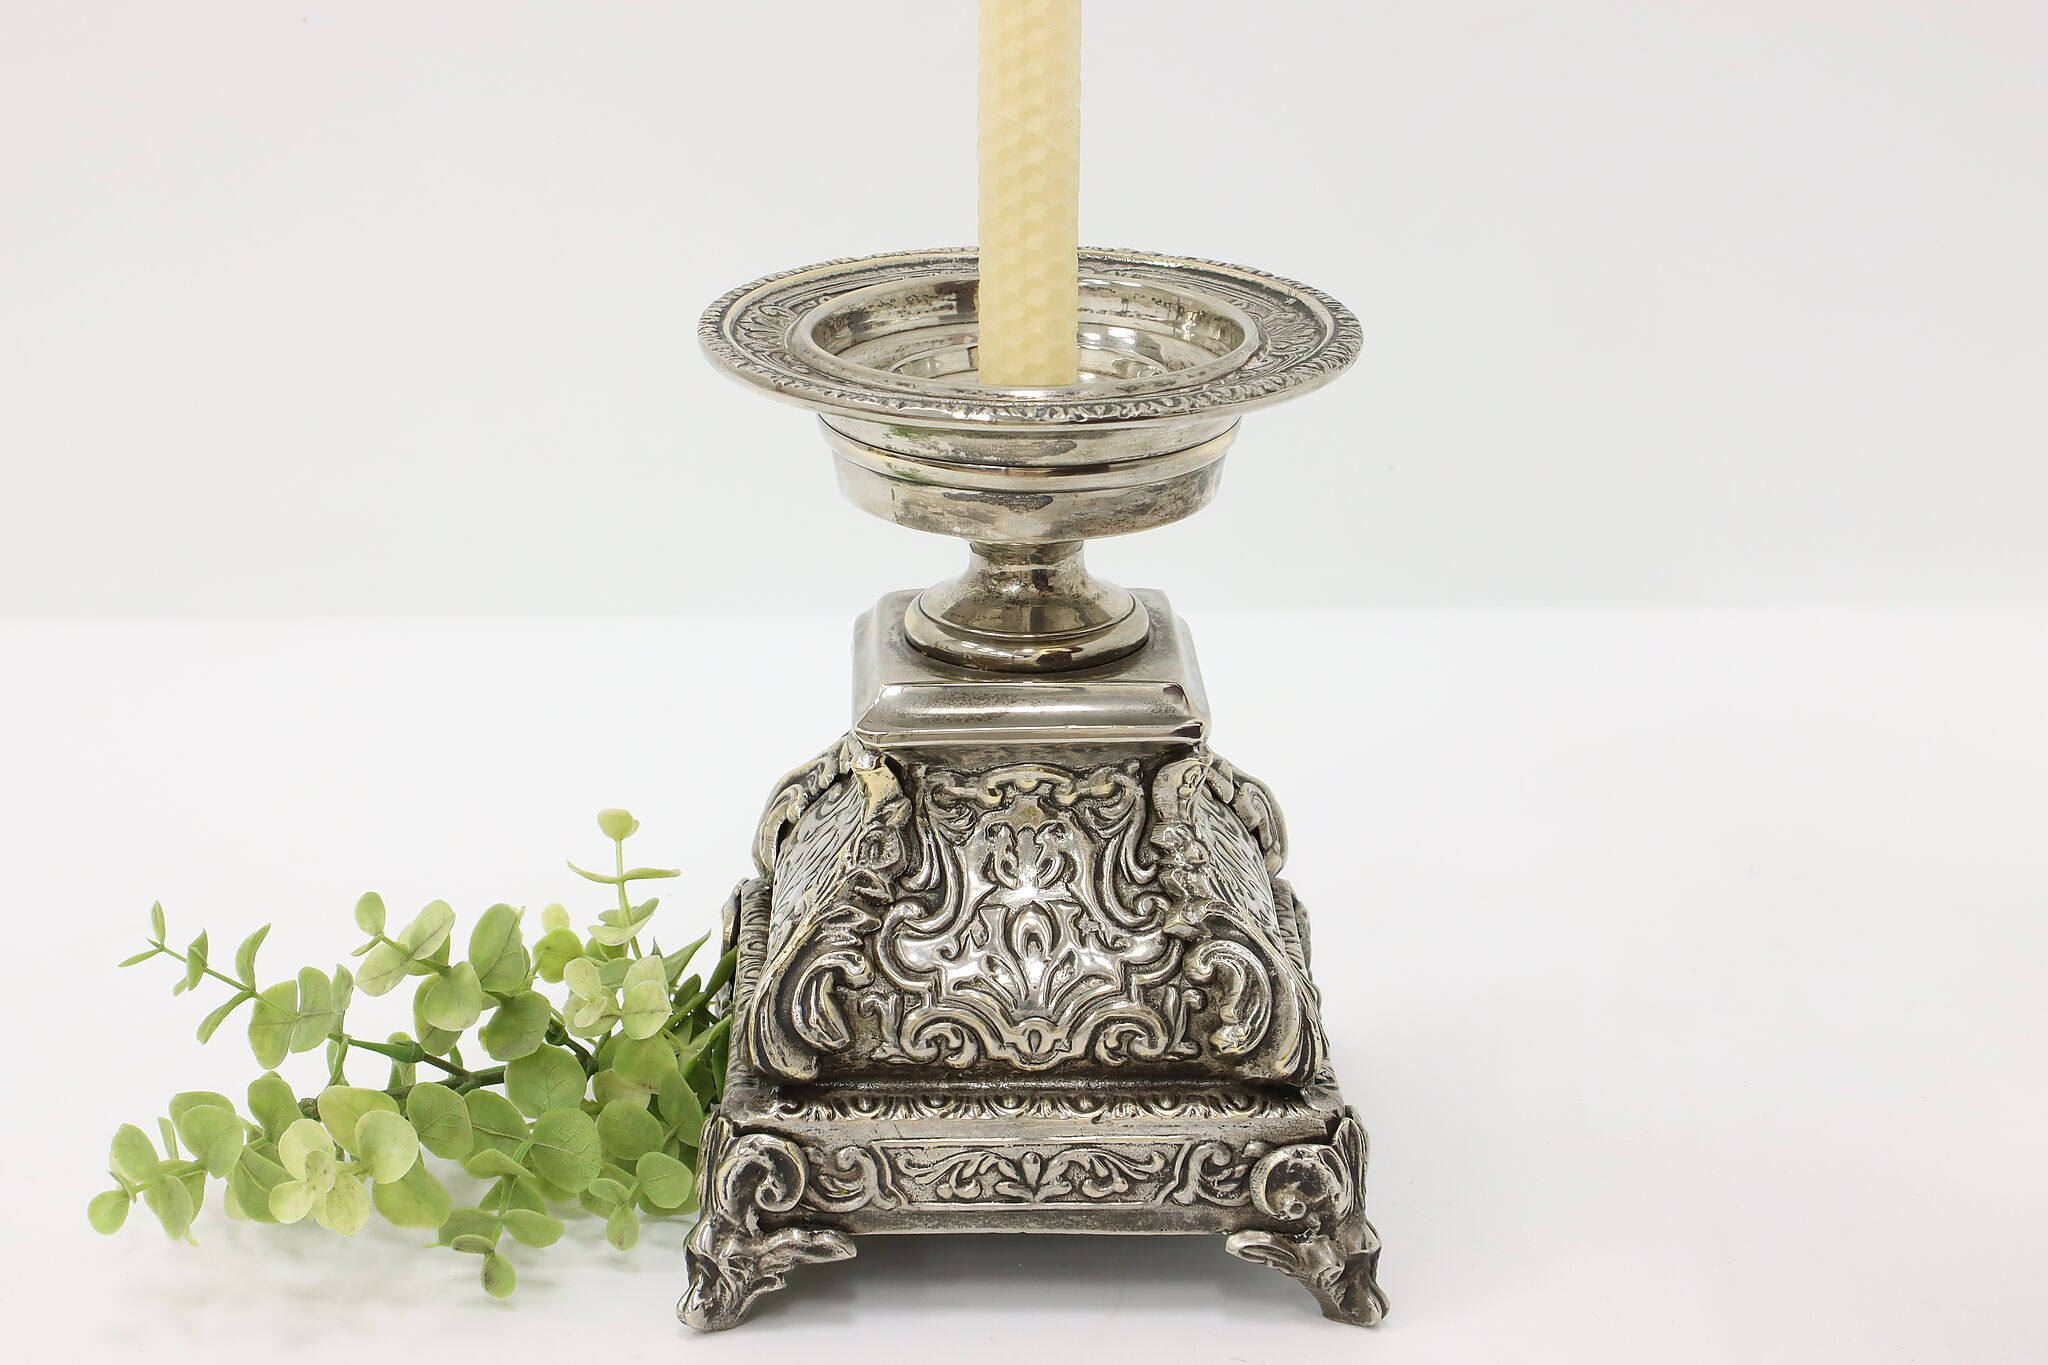 Victorian Design Vintage Silverplate Candlestick or Holder, Castilian